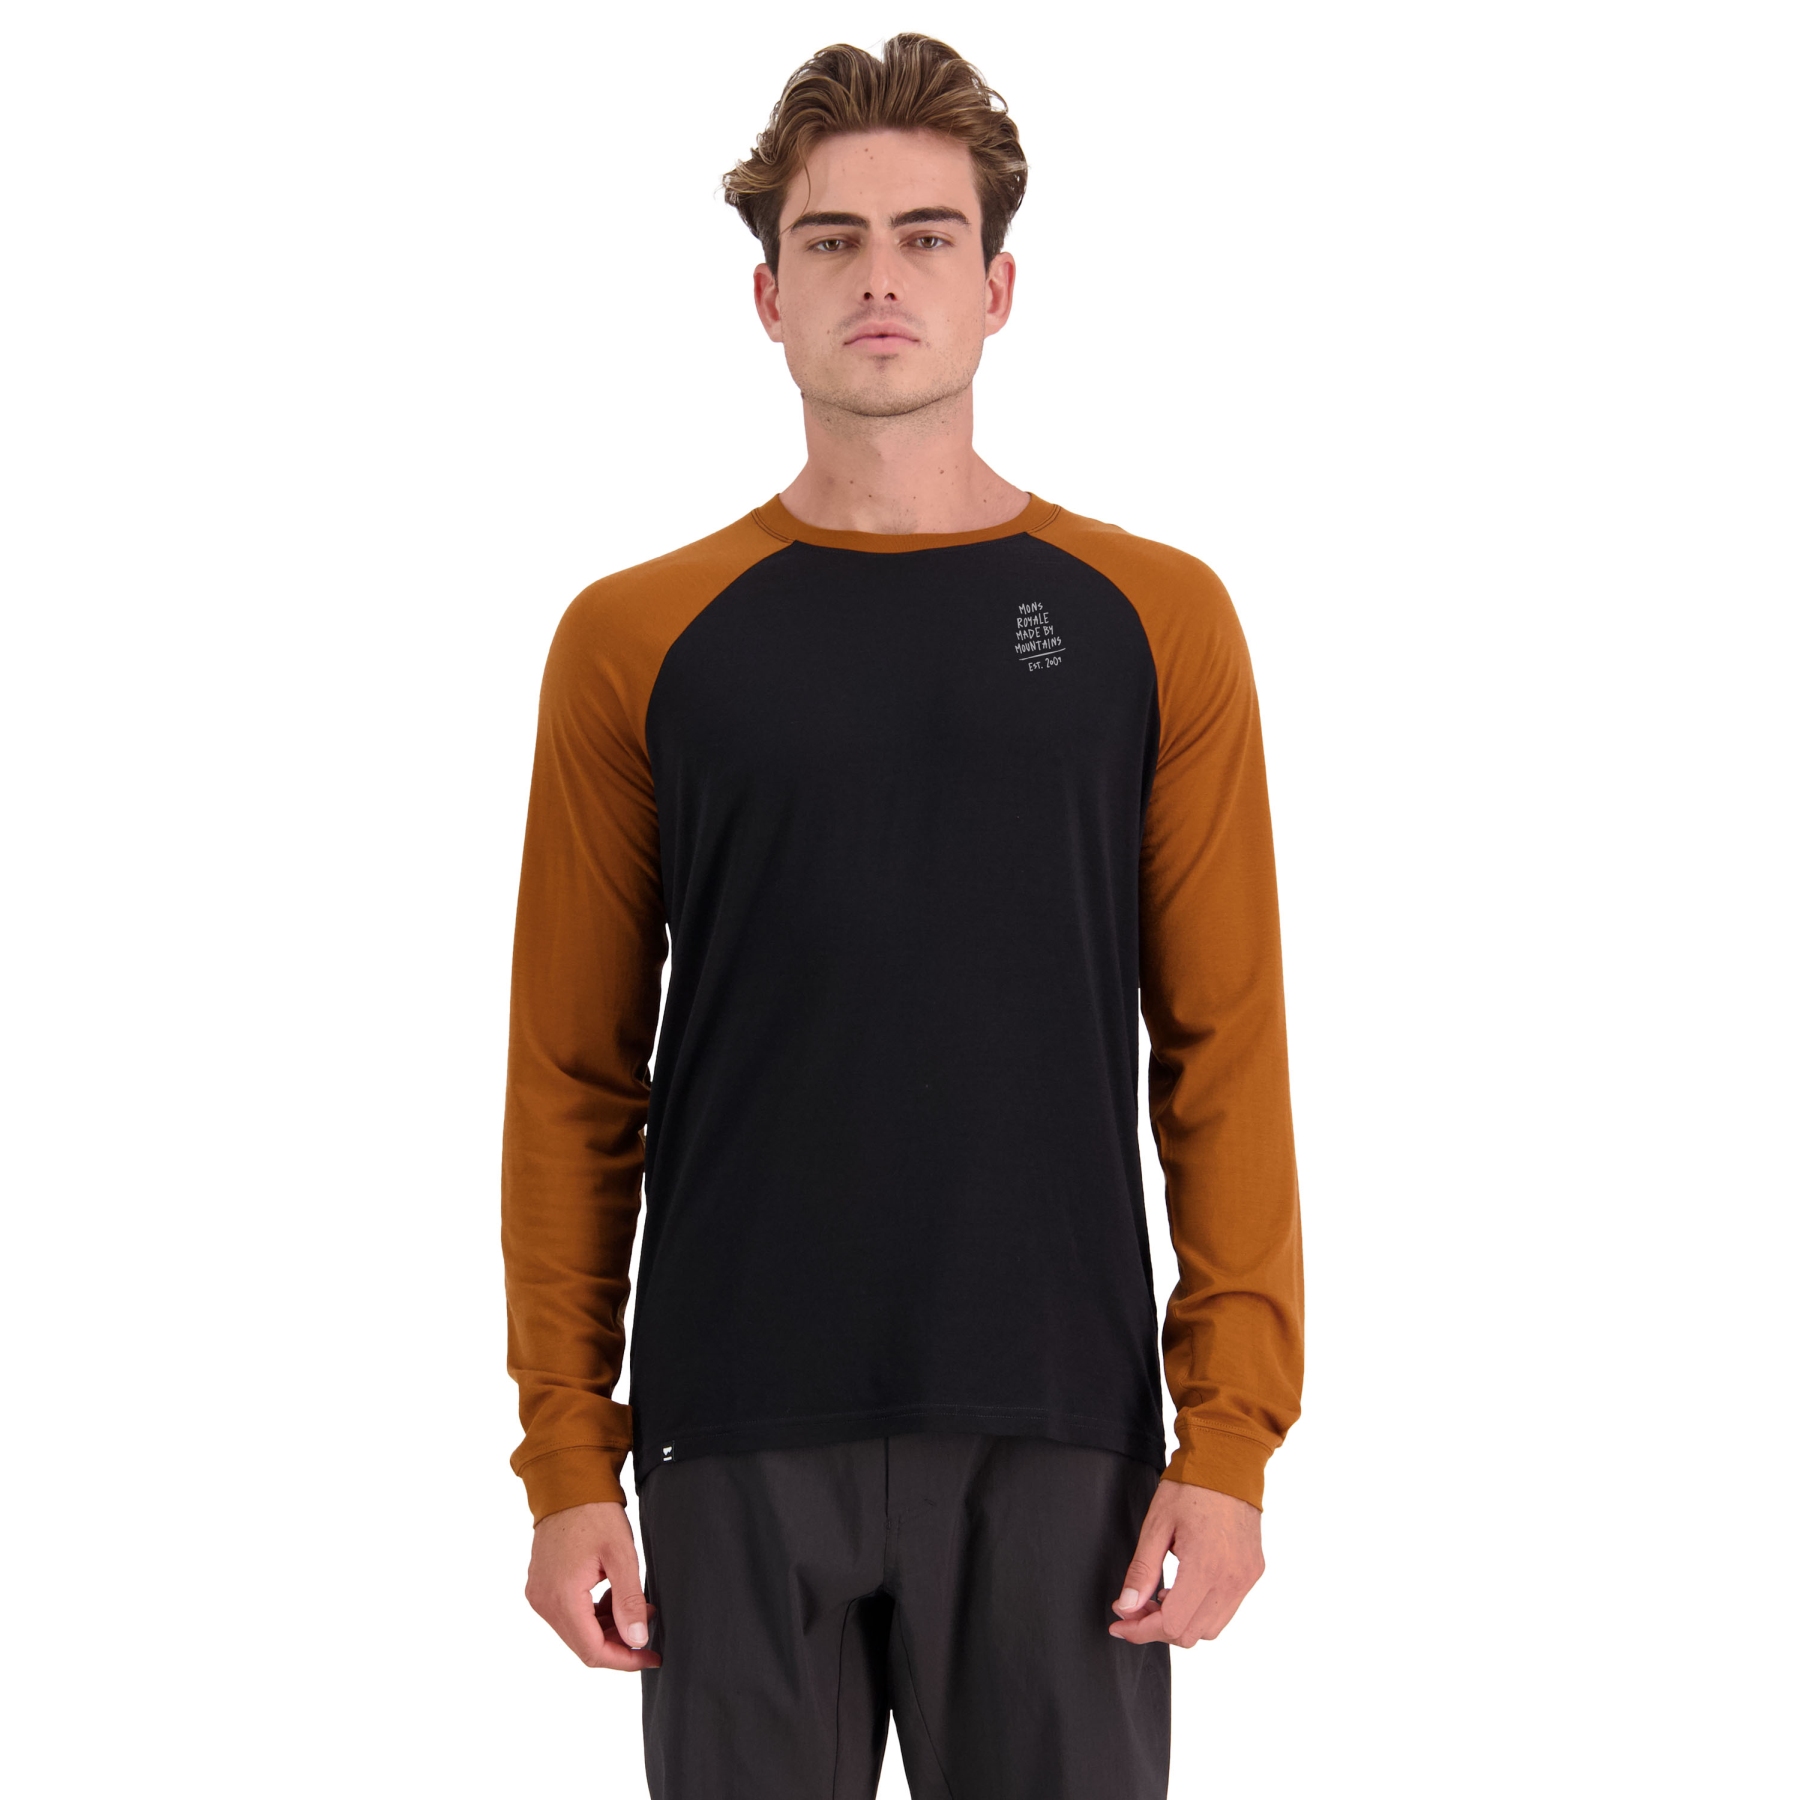 Productfoto van Mons Royale Icon Merino Air-Con Raglan Shirt met Lange Mouwen Heren - zwart / copper